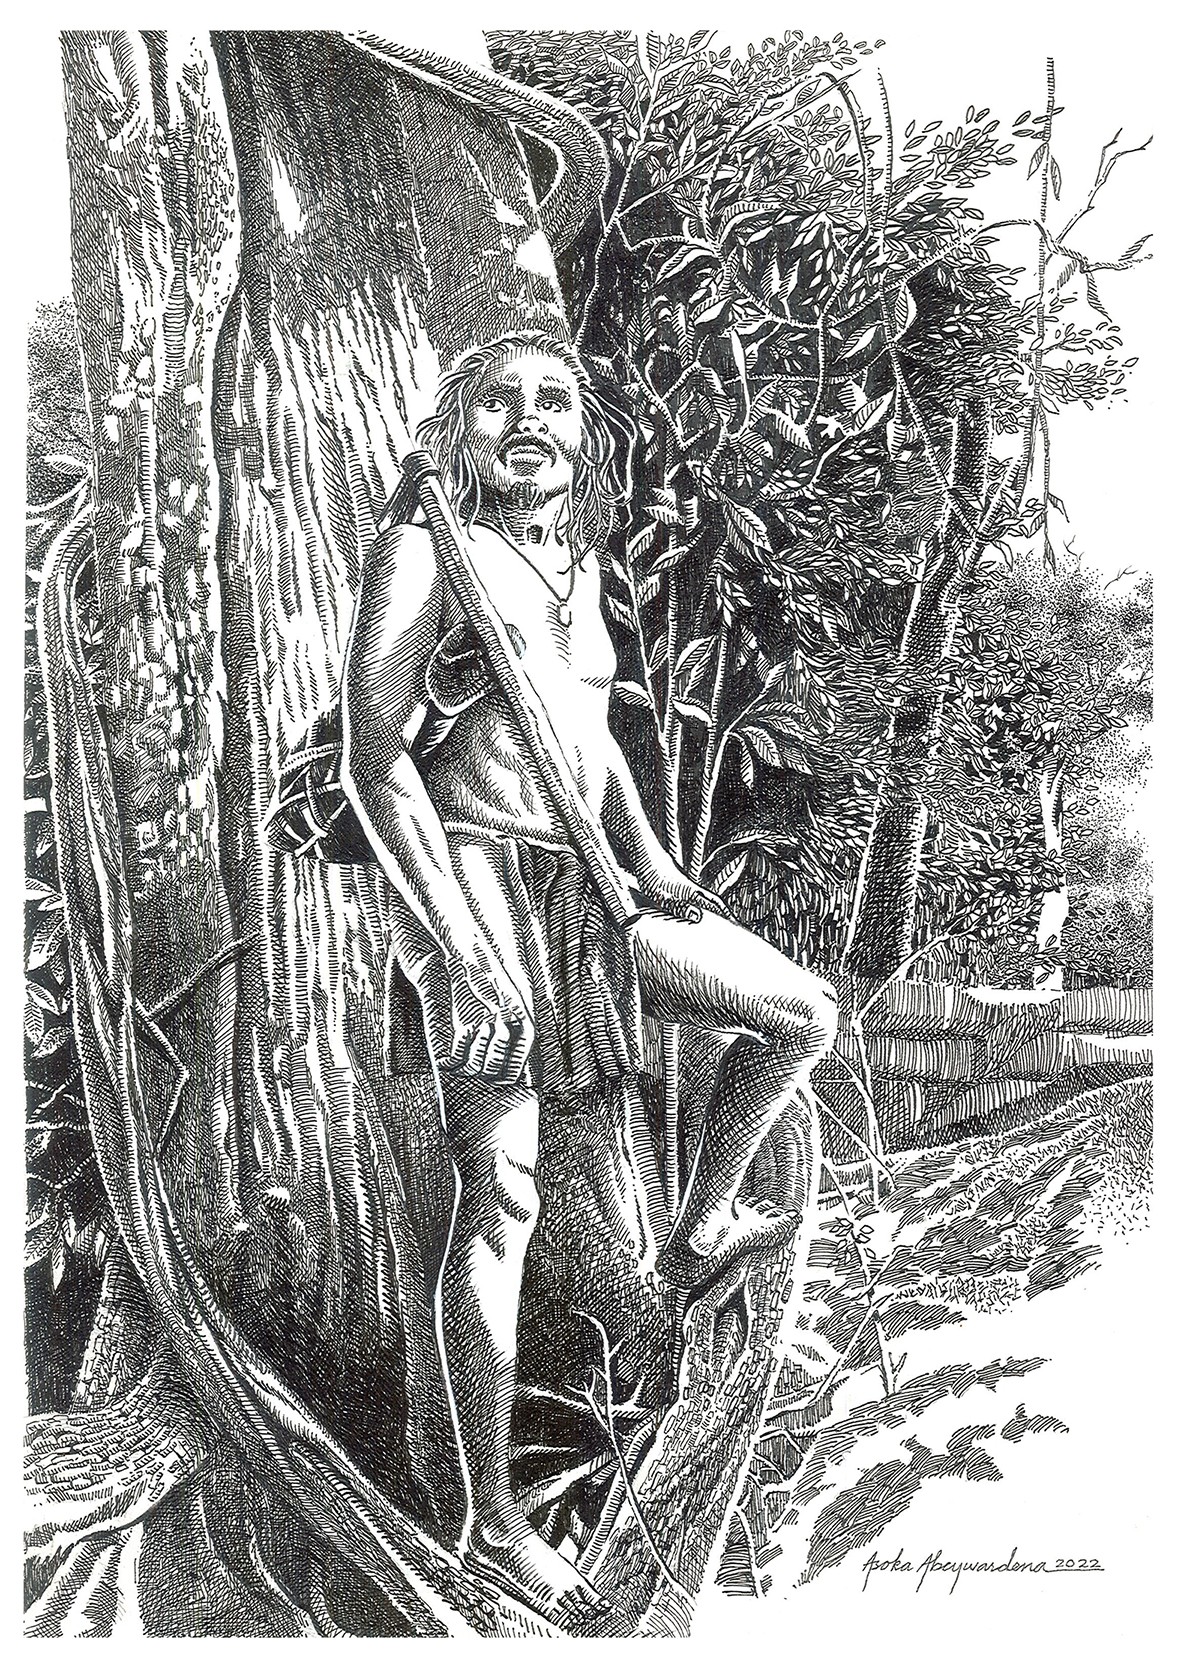 Member of an Indigenous man by ASOKA ABEYWARDENA